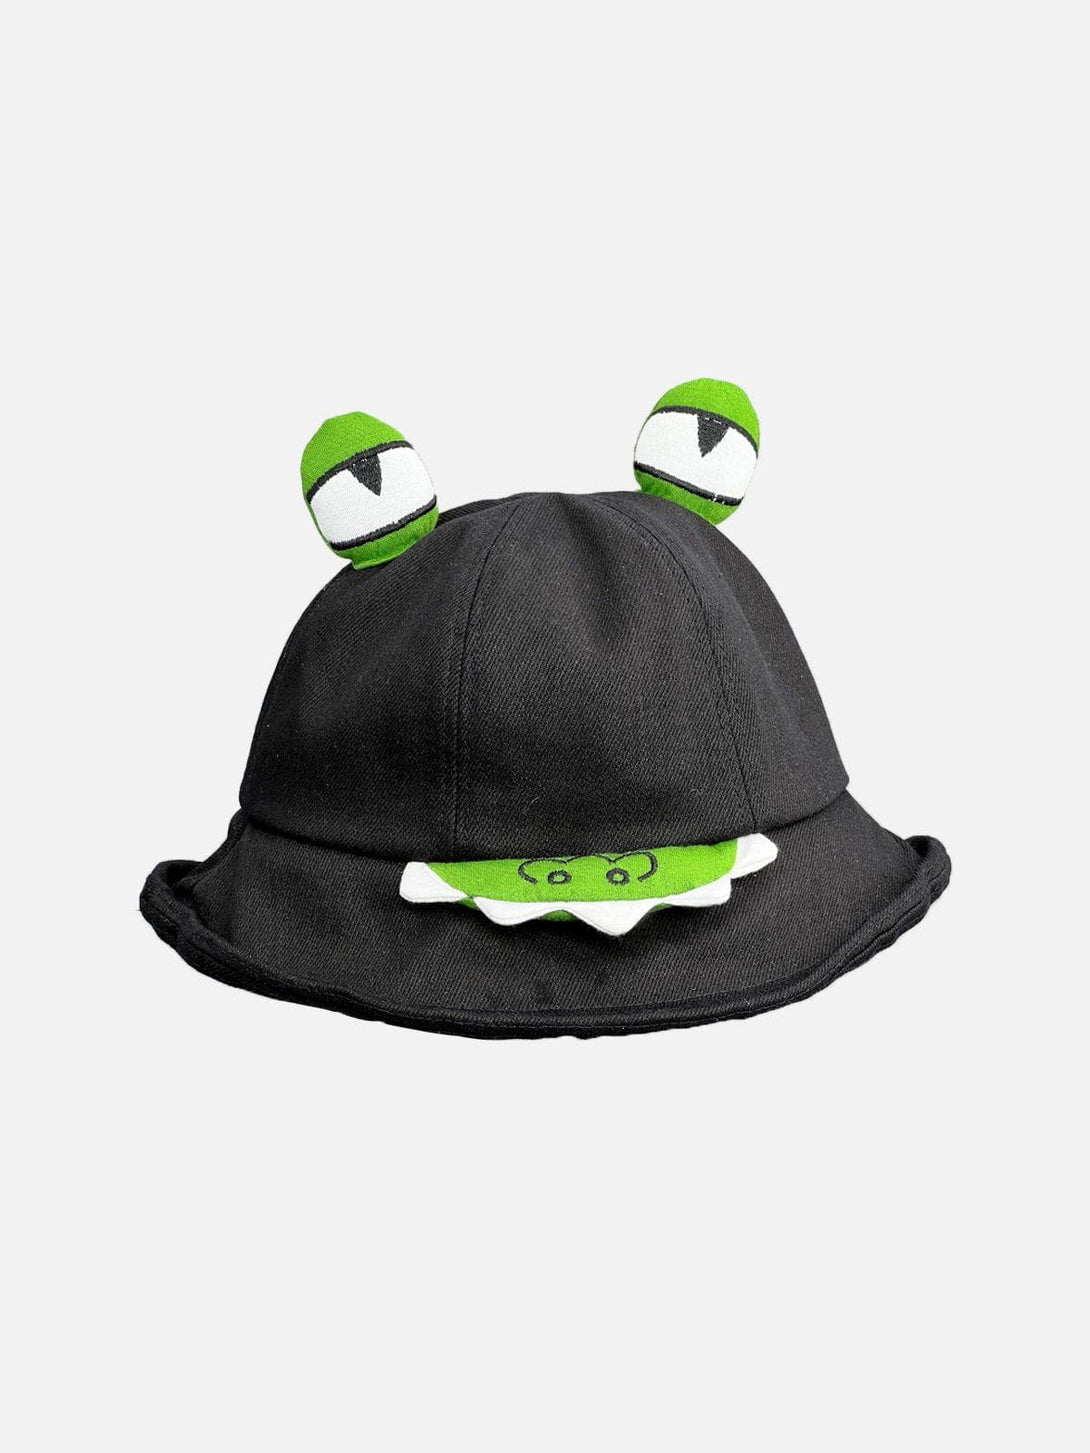 Majesda® - Cute Cartoon 3D Big Eye Hat- Outfit Ideas - Streetwear Fashion - majesda.com